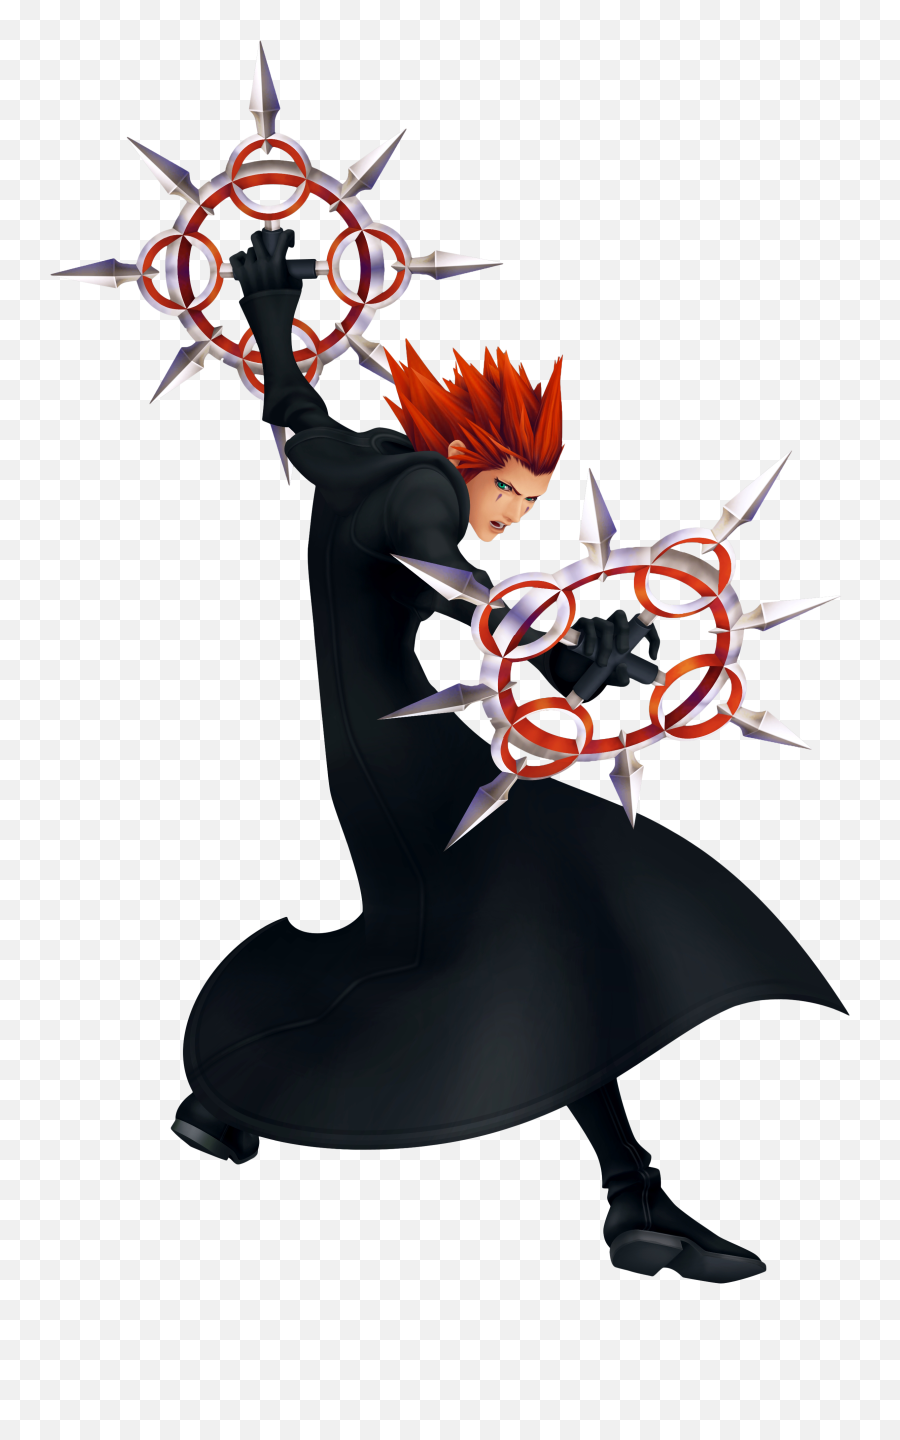 Axel Kingdom Hearts Png Roxas Icon